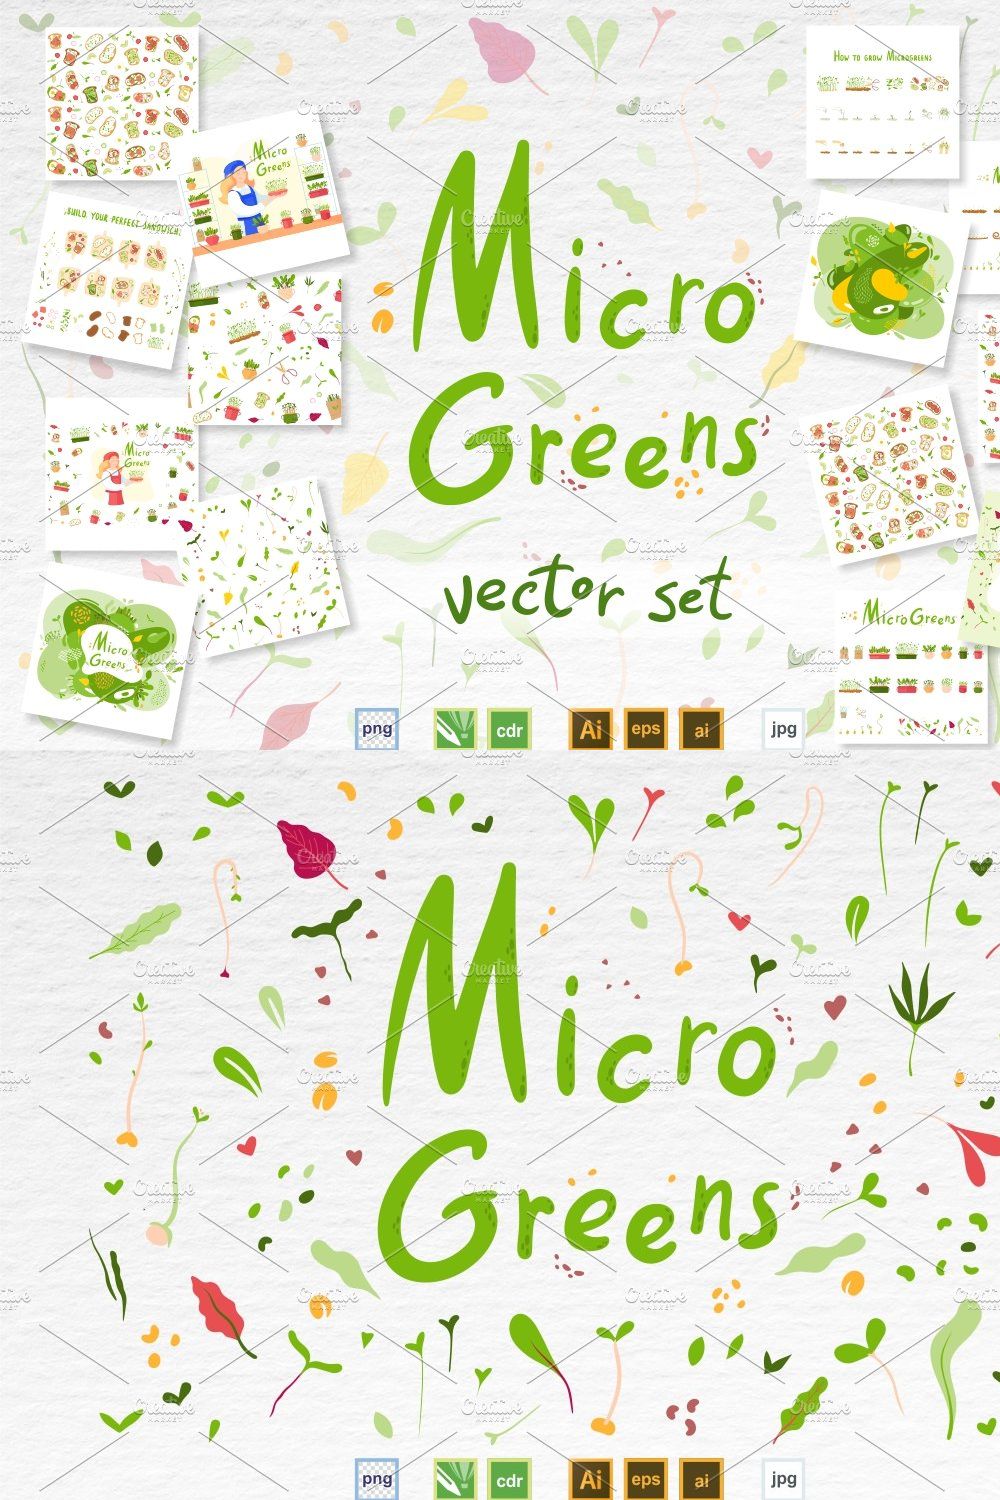 Microgreen illustration set 1 pinterest preview image.